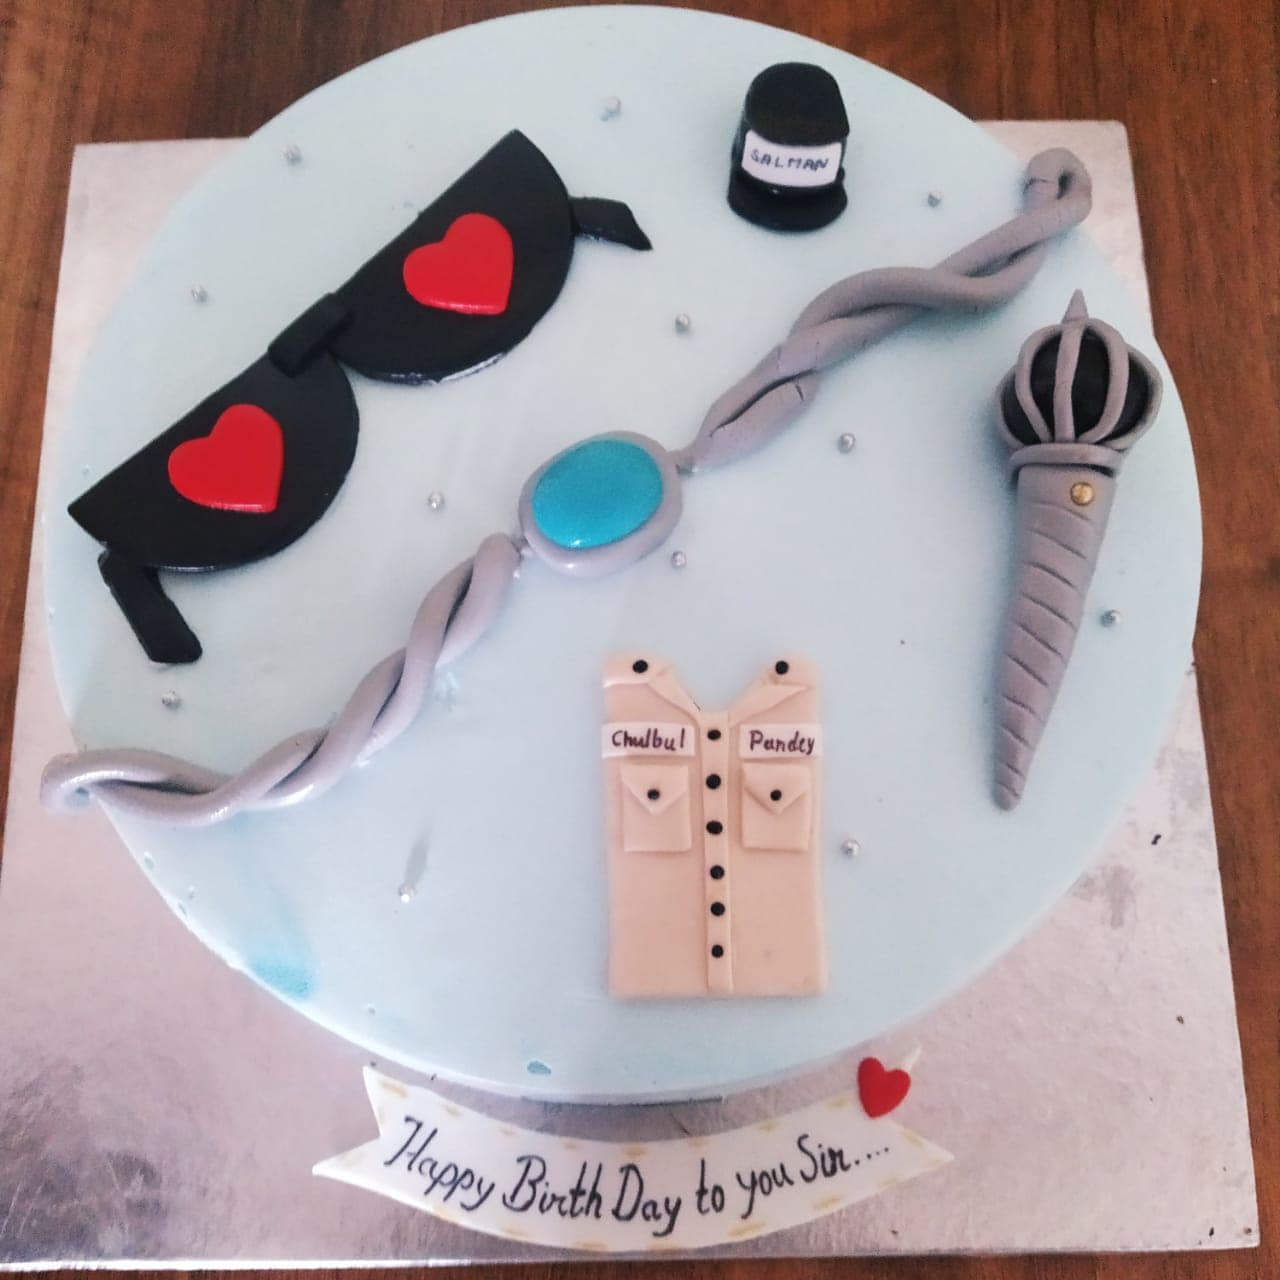 Salman Khan Cuts His Birthday Cake at Panvel Farmhouse, Says 'in no Mood to  Celebrate' | India.com